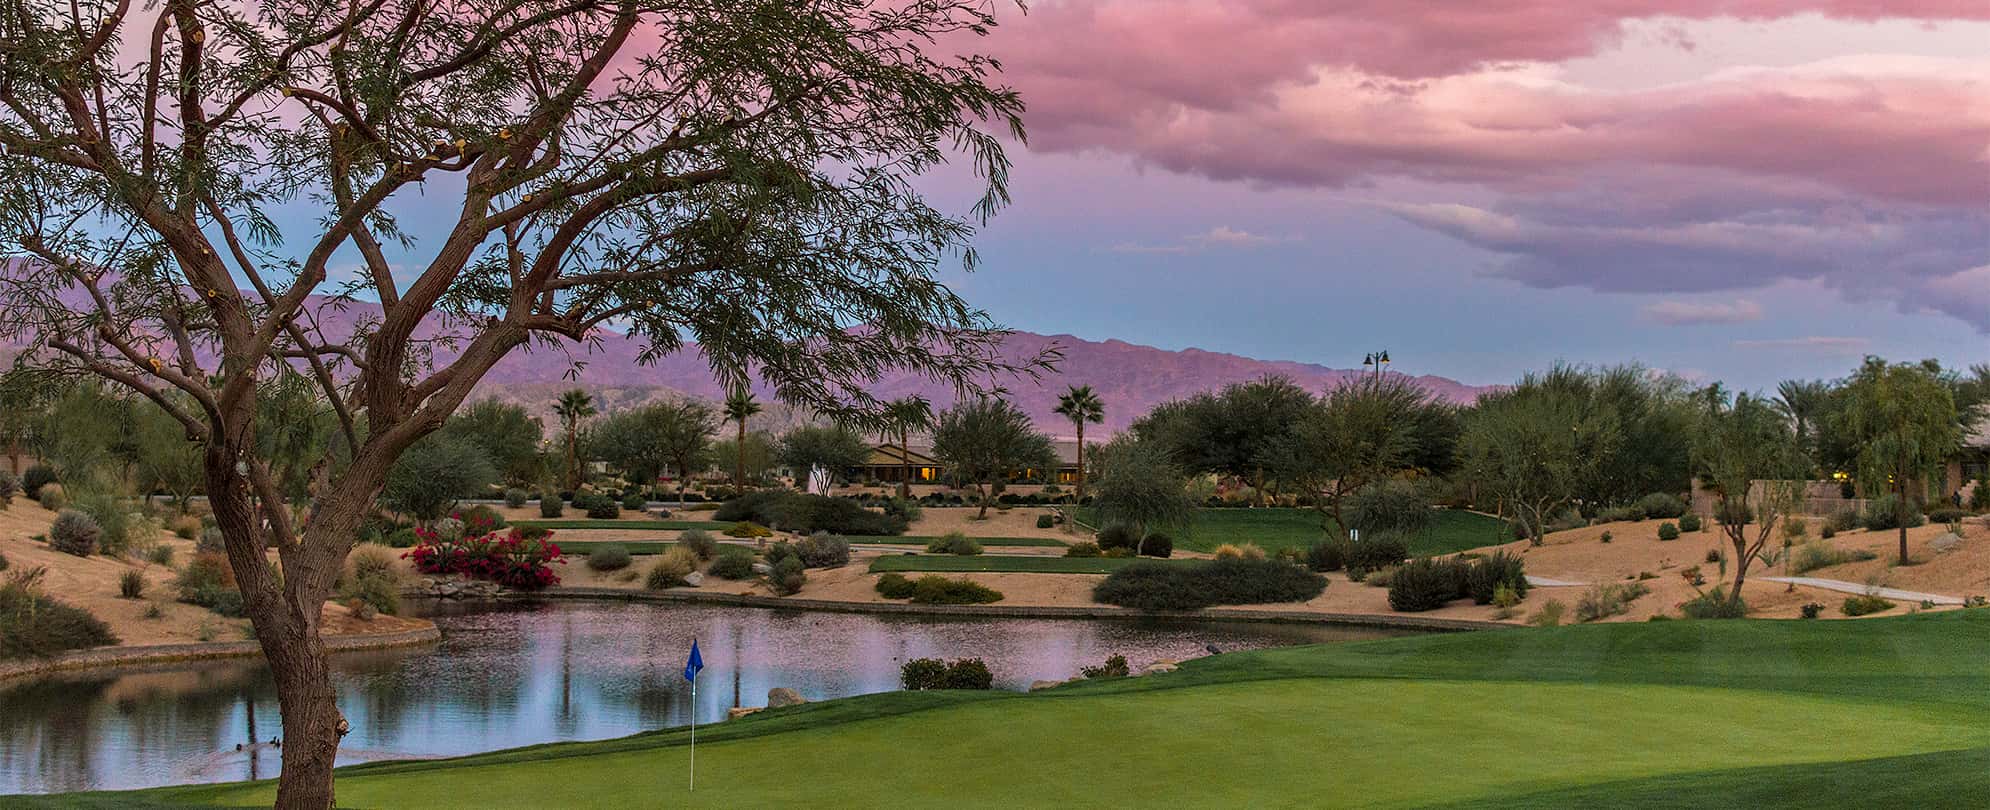 Club Wyndham resort golf course during sunset